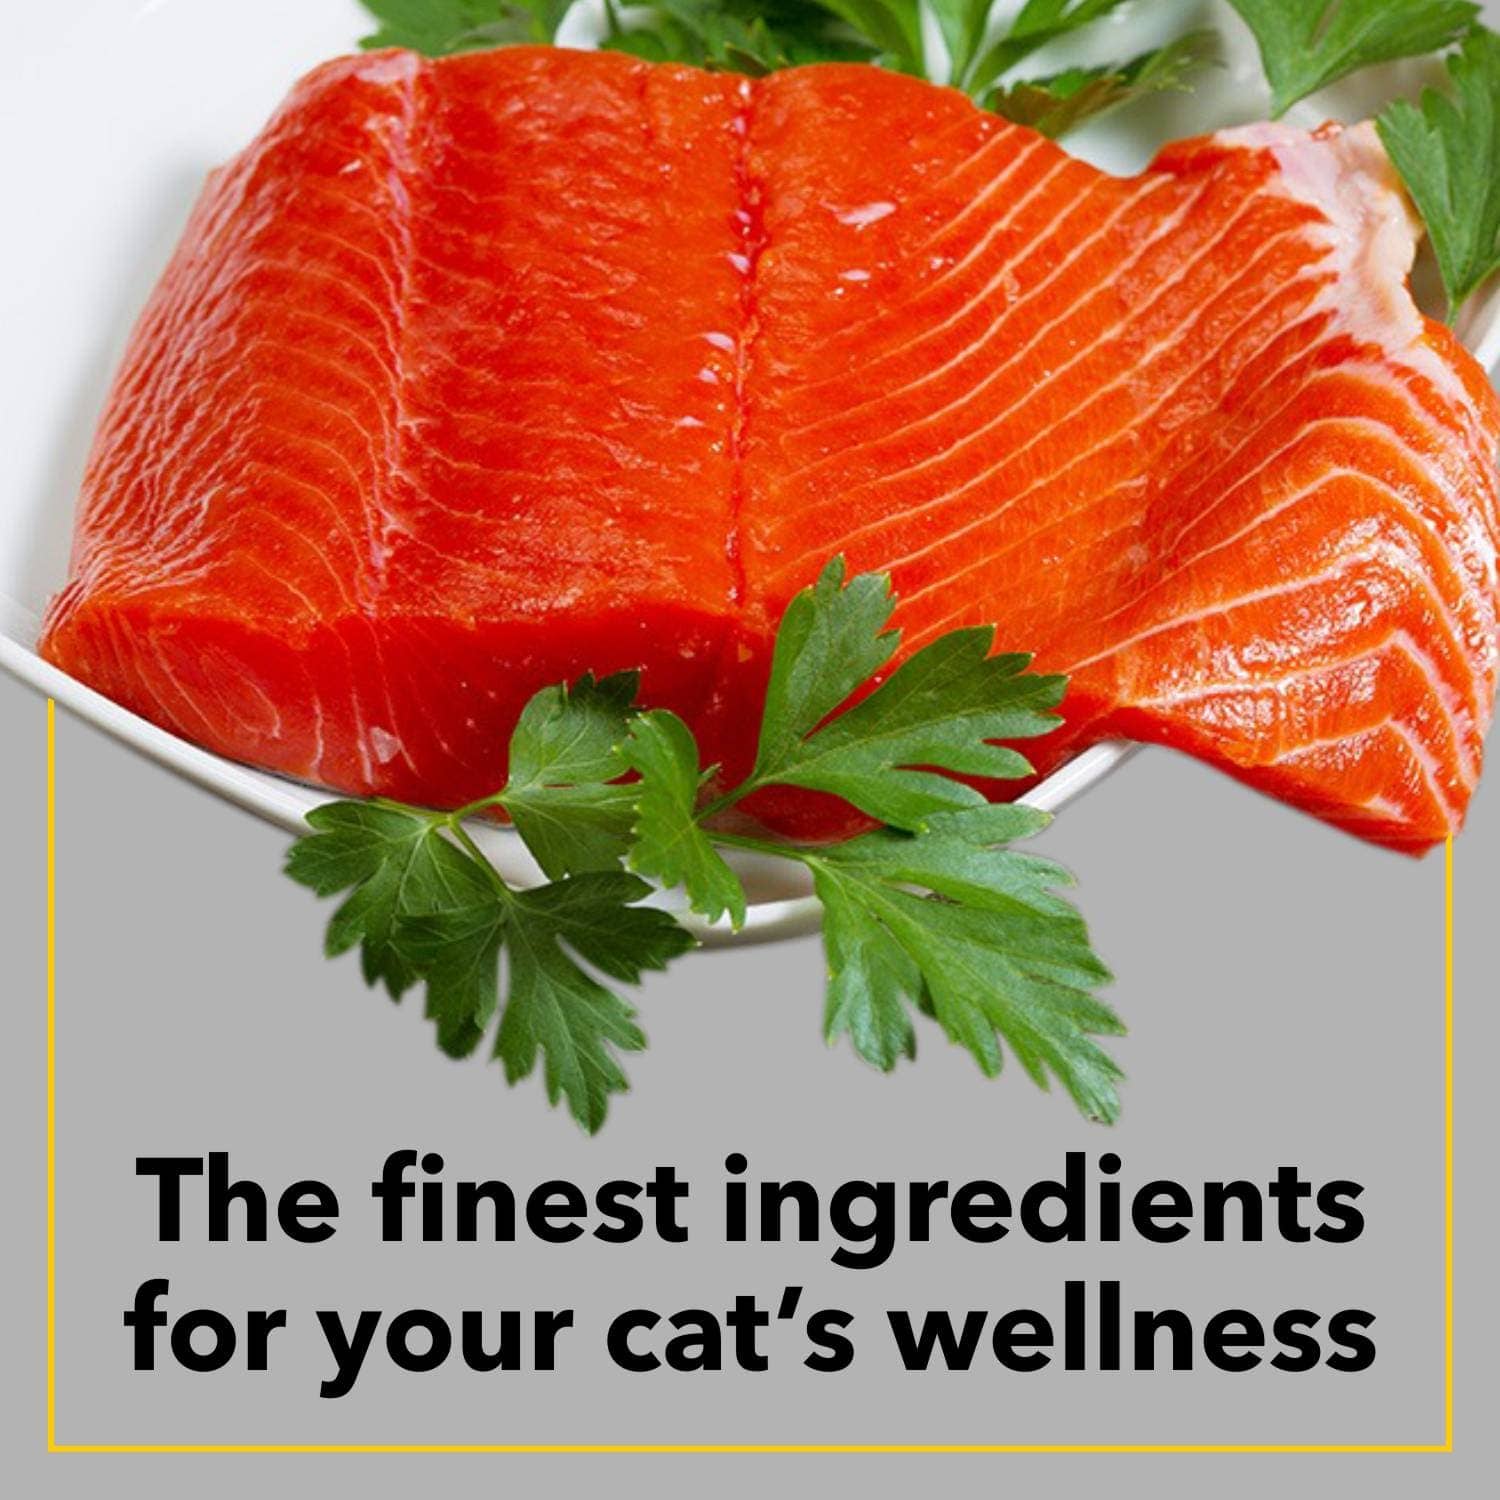 Purepet Tuna & Salmon and Seafood Adult Cat Dry Food Combo